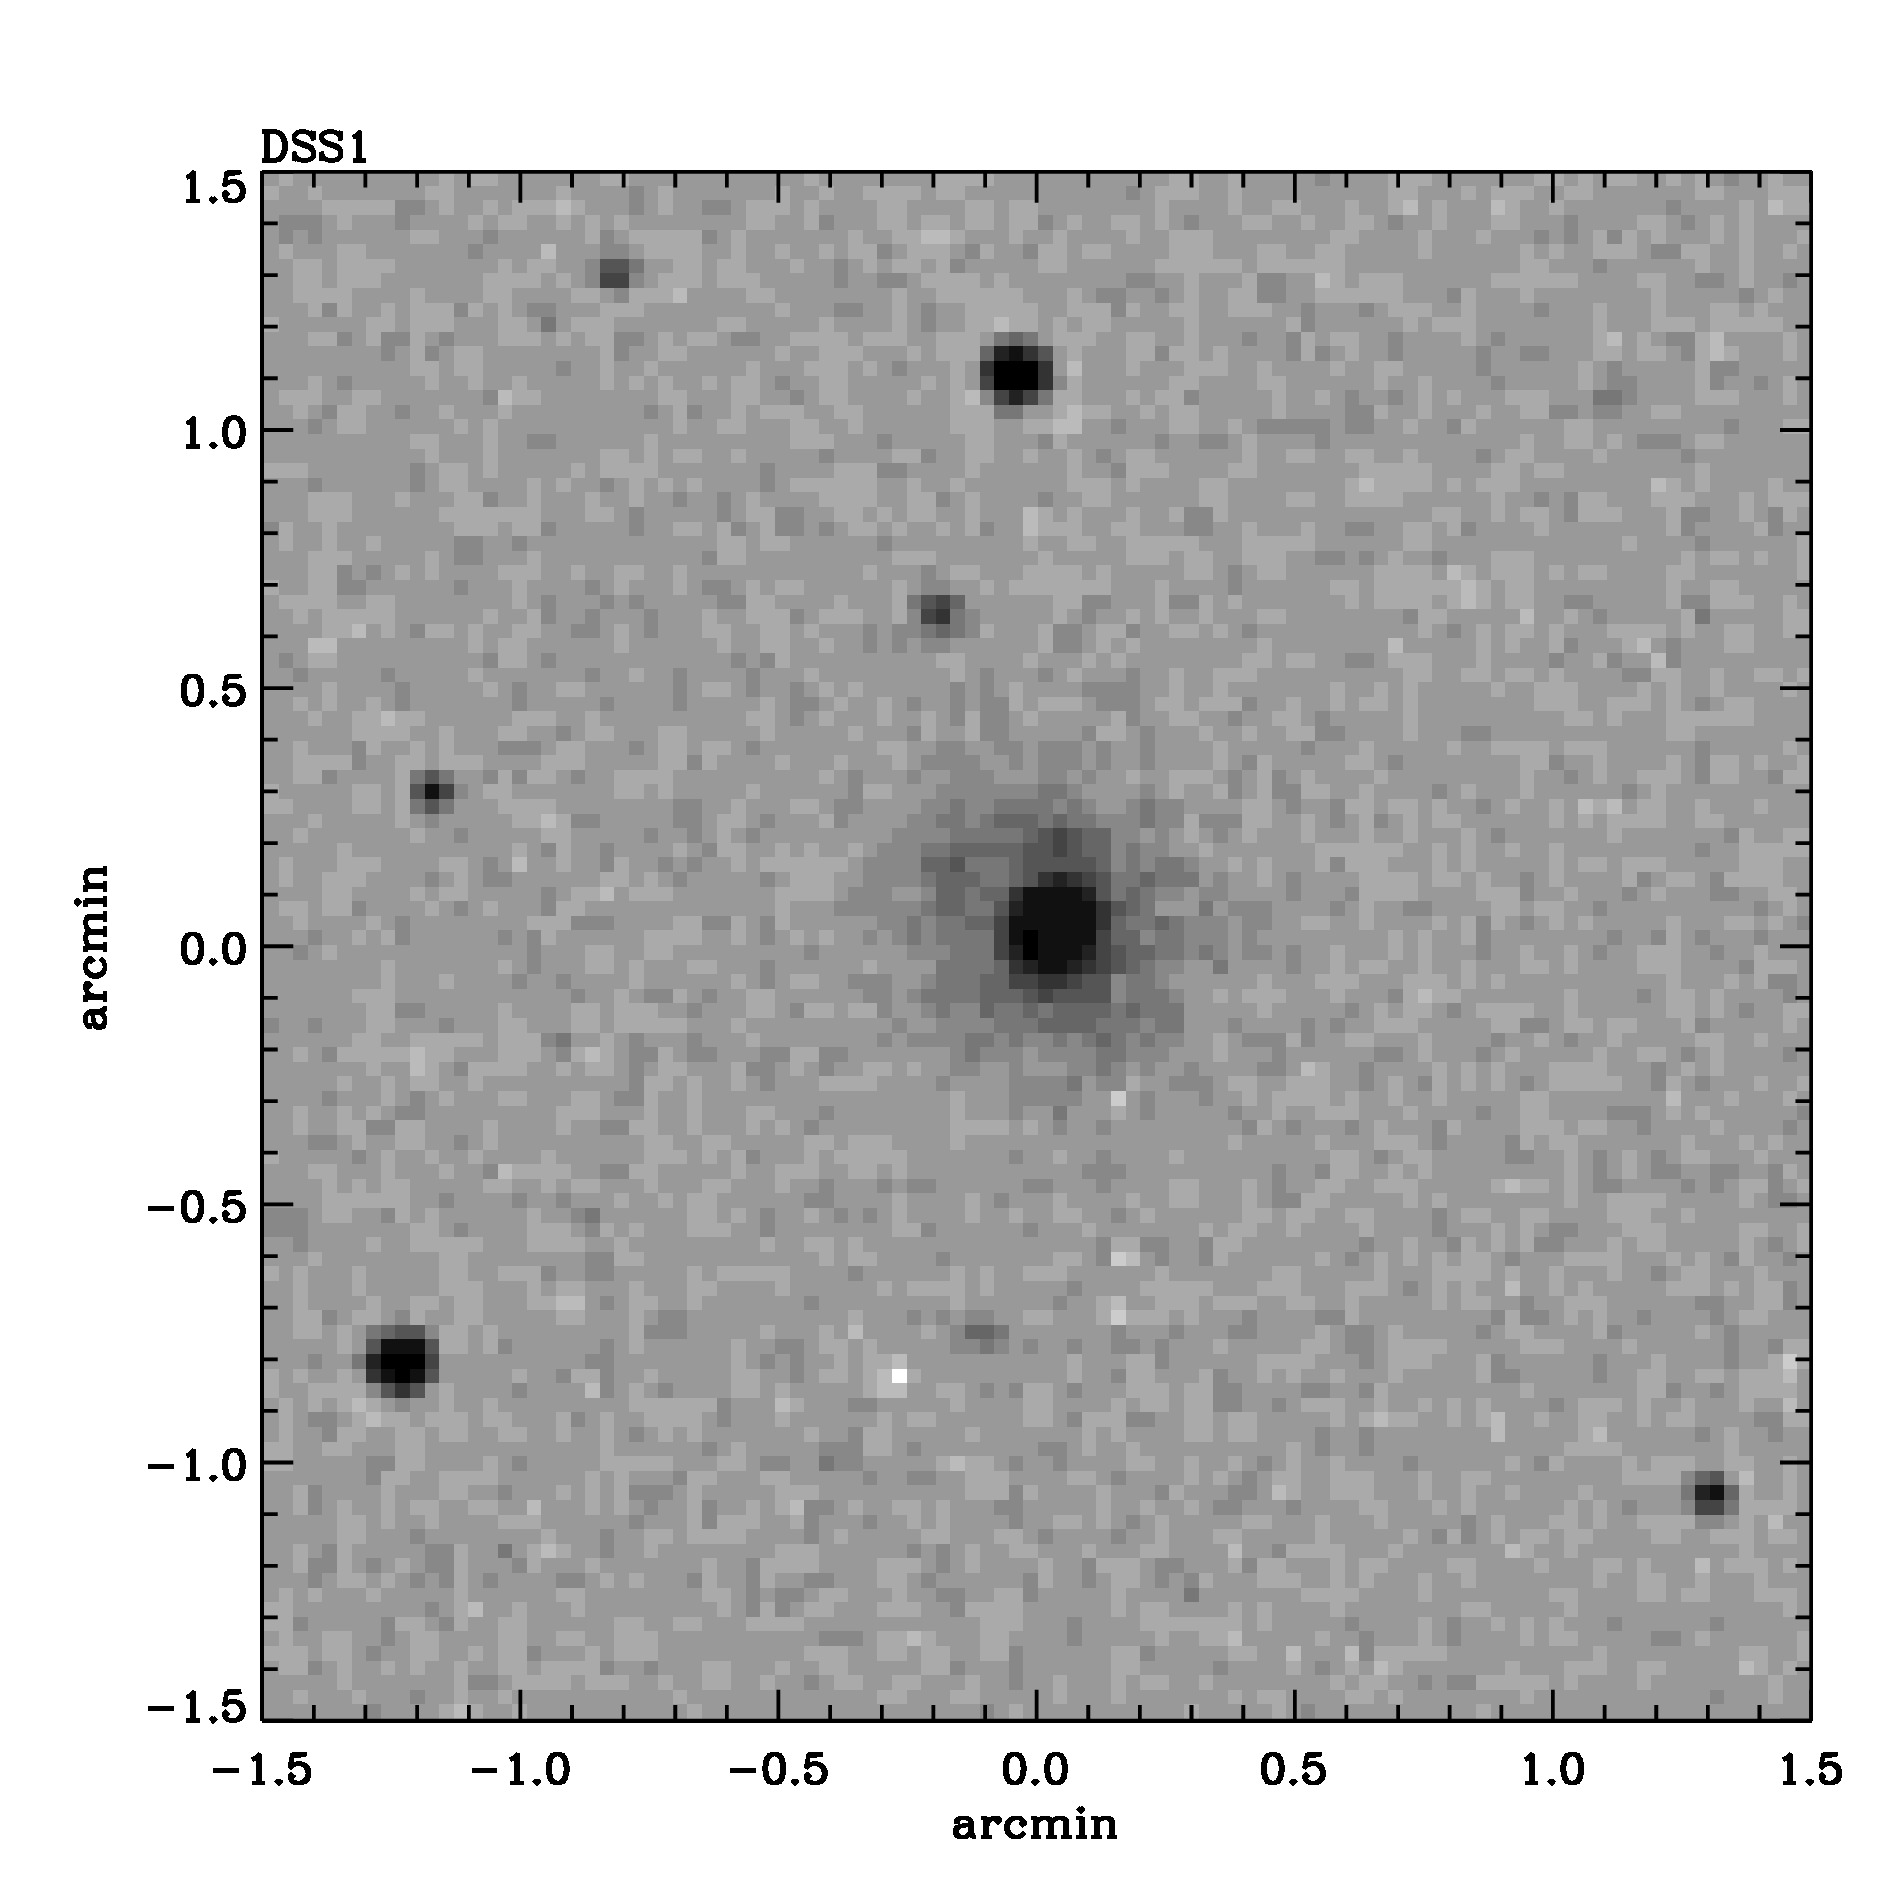 Optical image for SWIFT J1209.5+4702